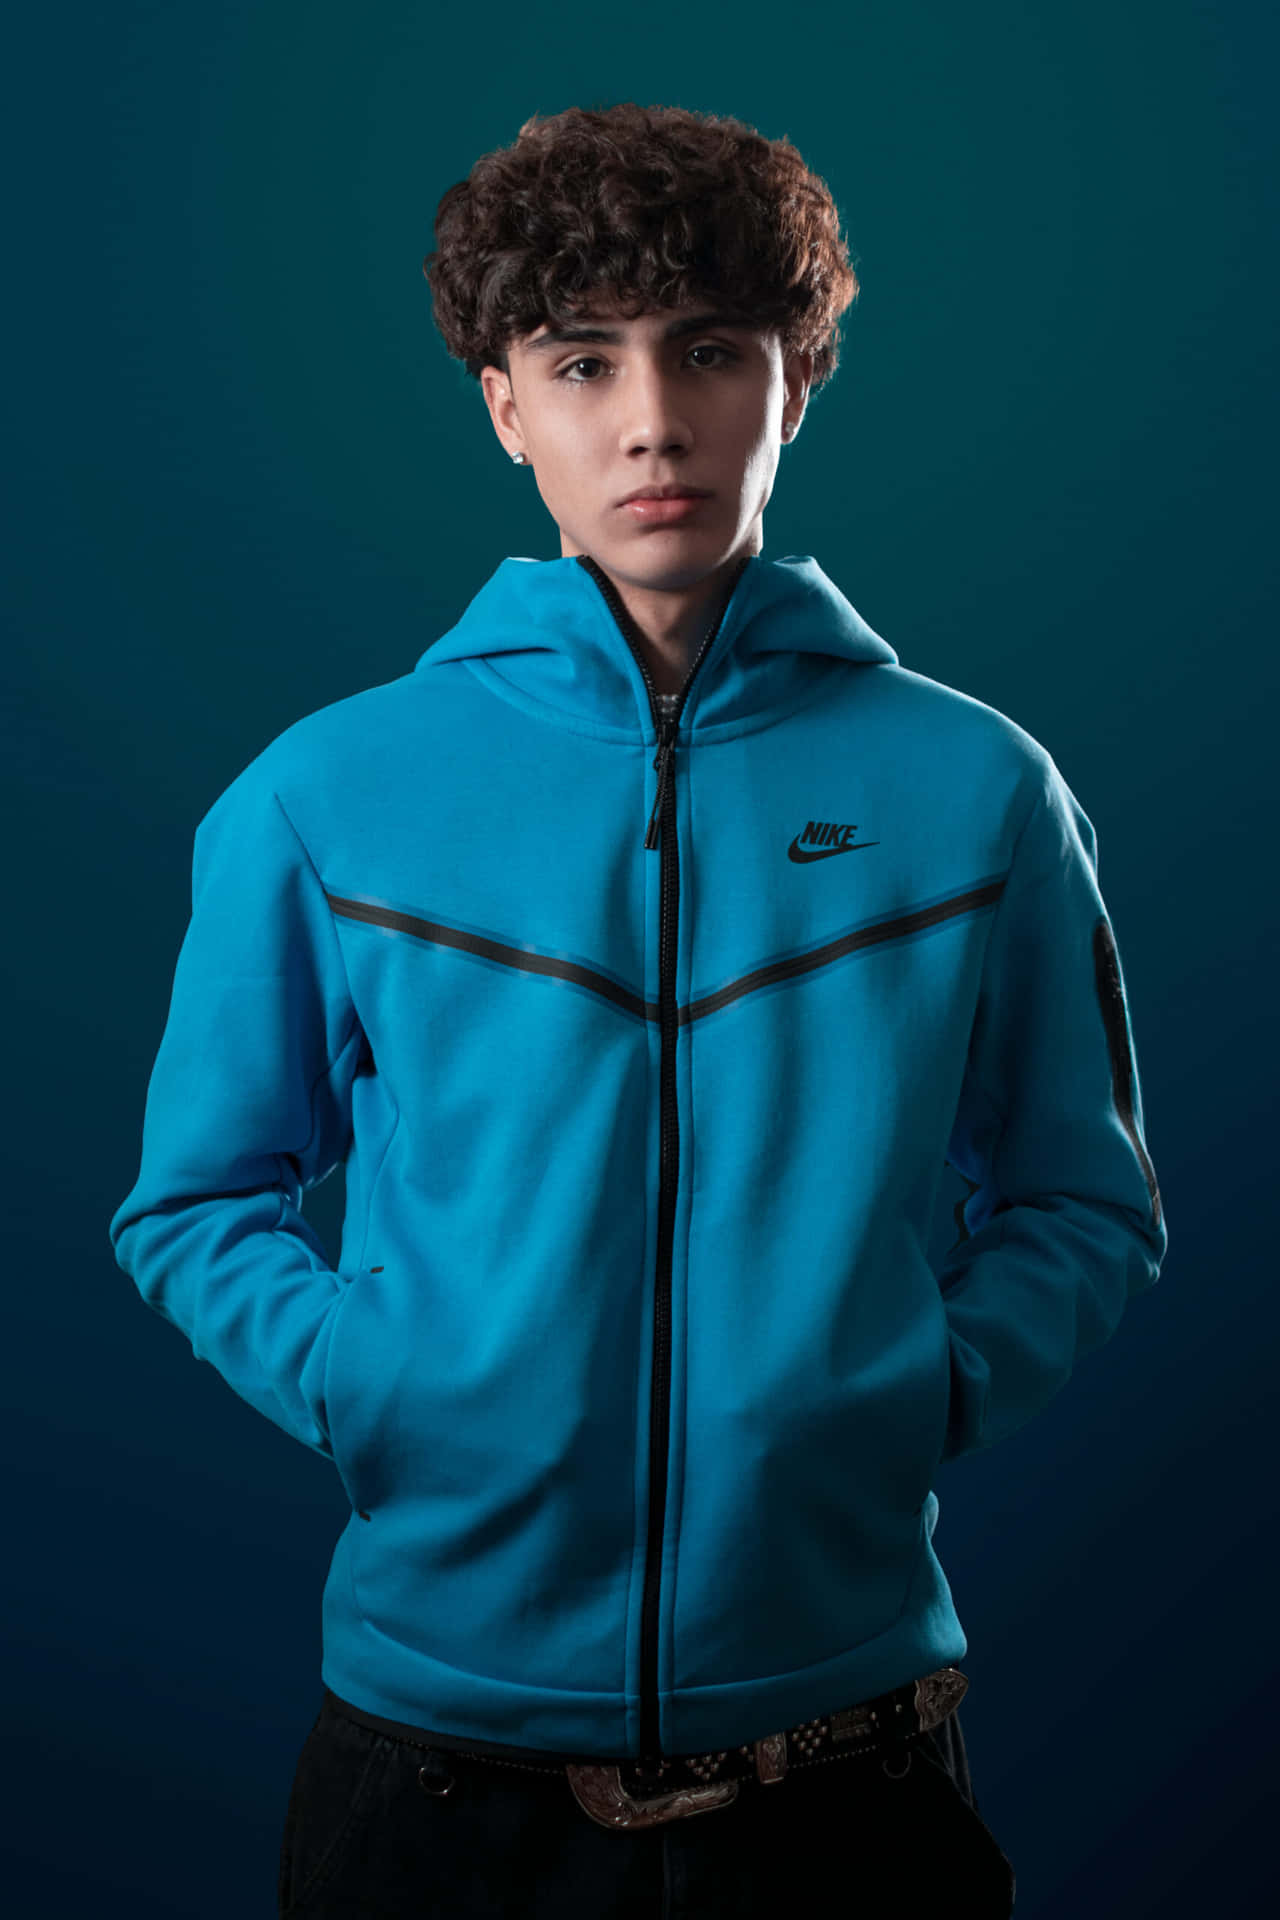 Young Manin Blue Nike Jacket Wallpaper